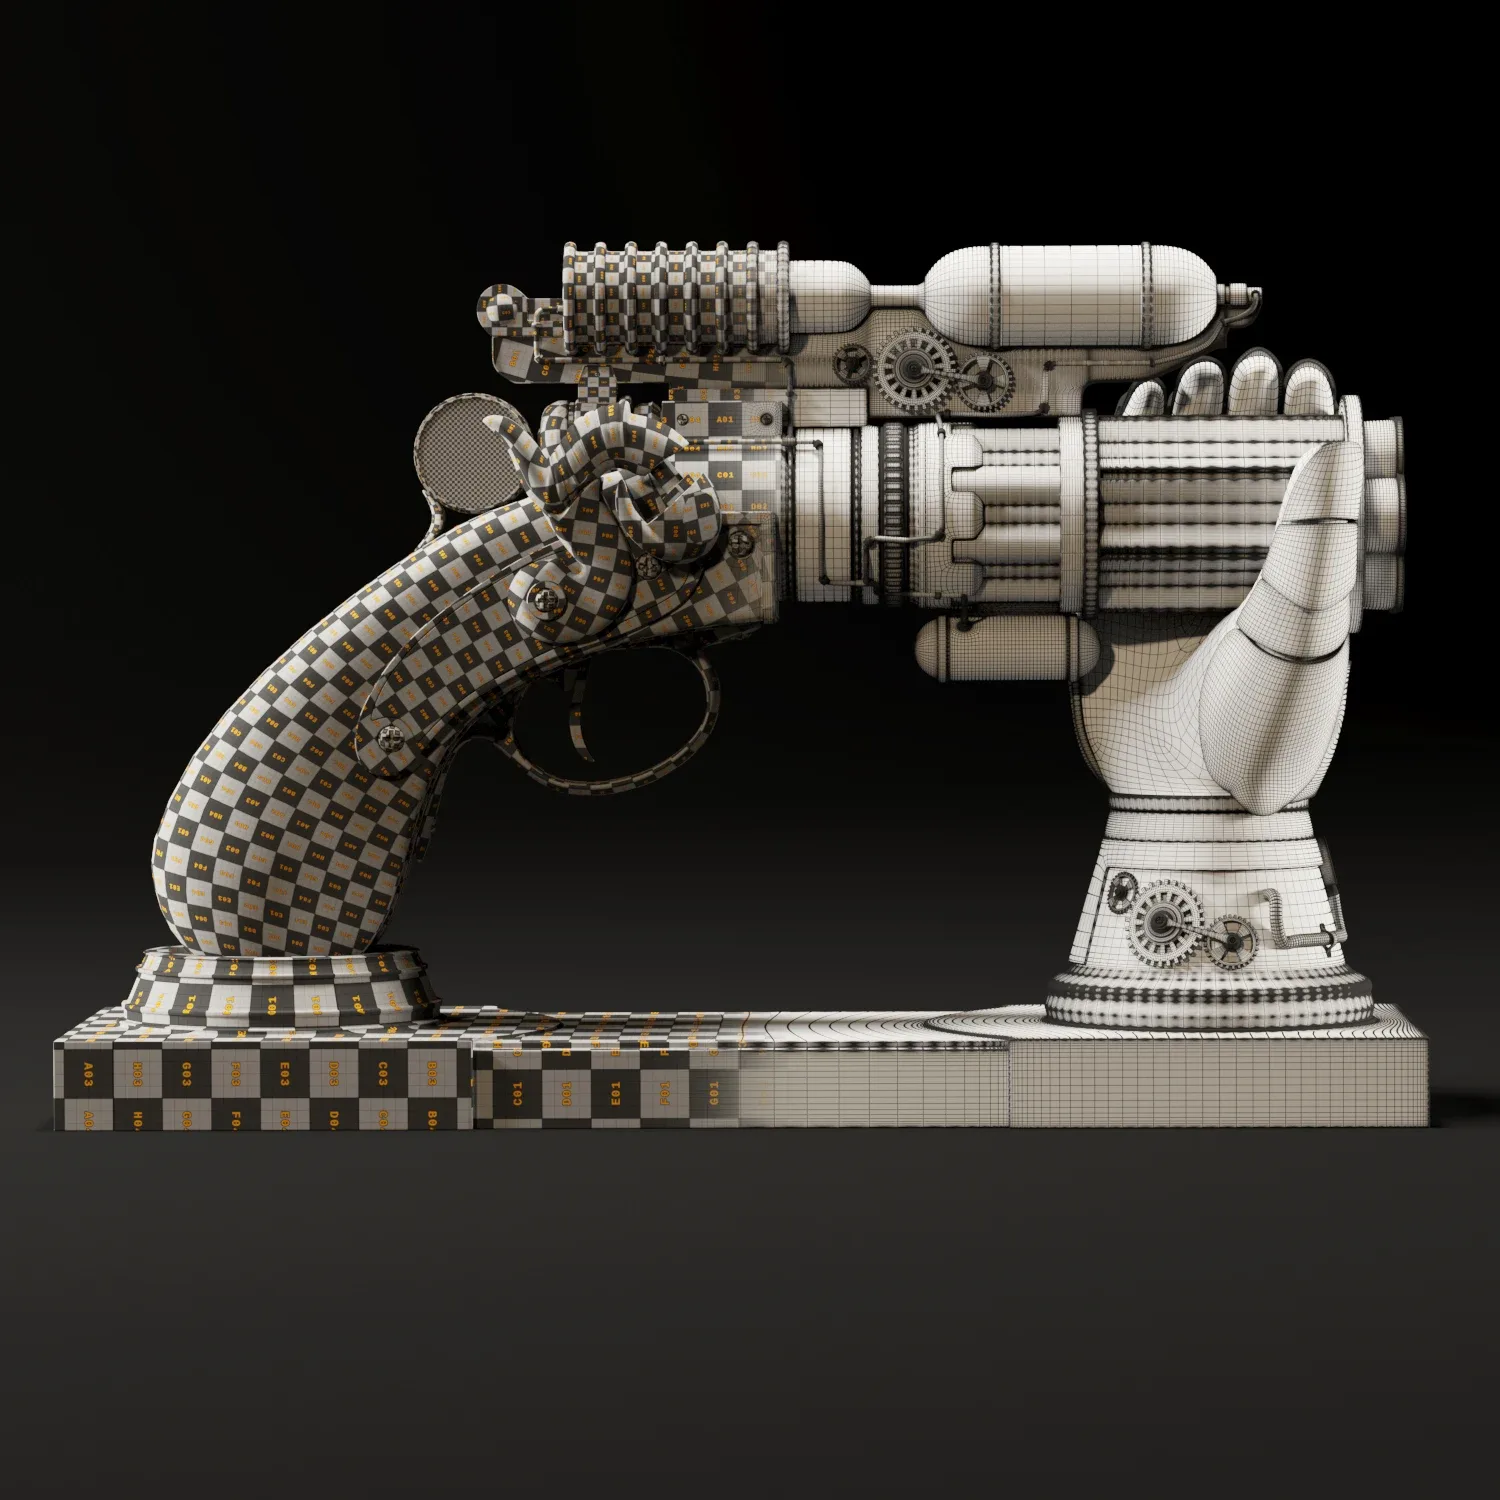 Decorative Steampunk Gun